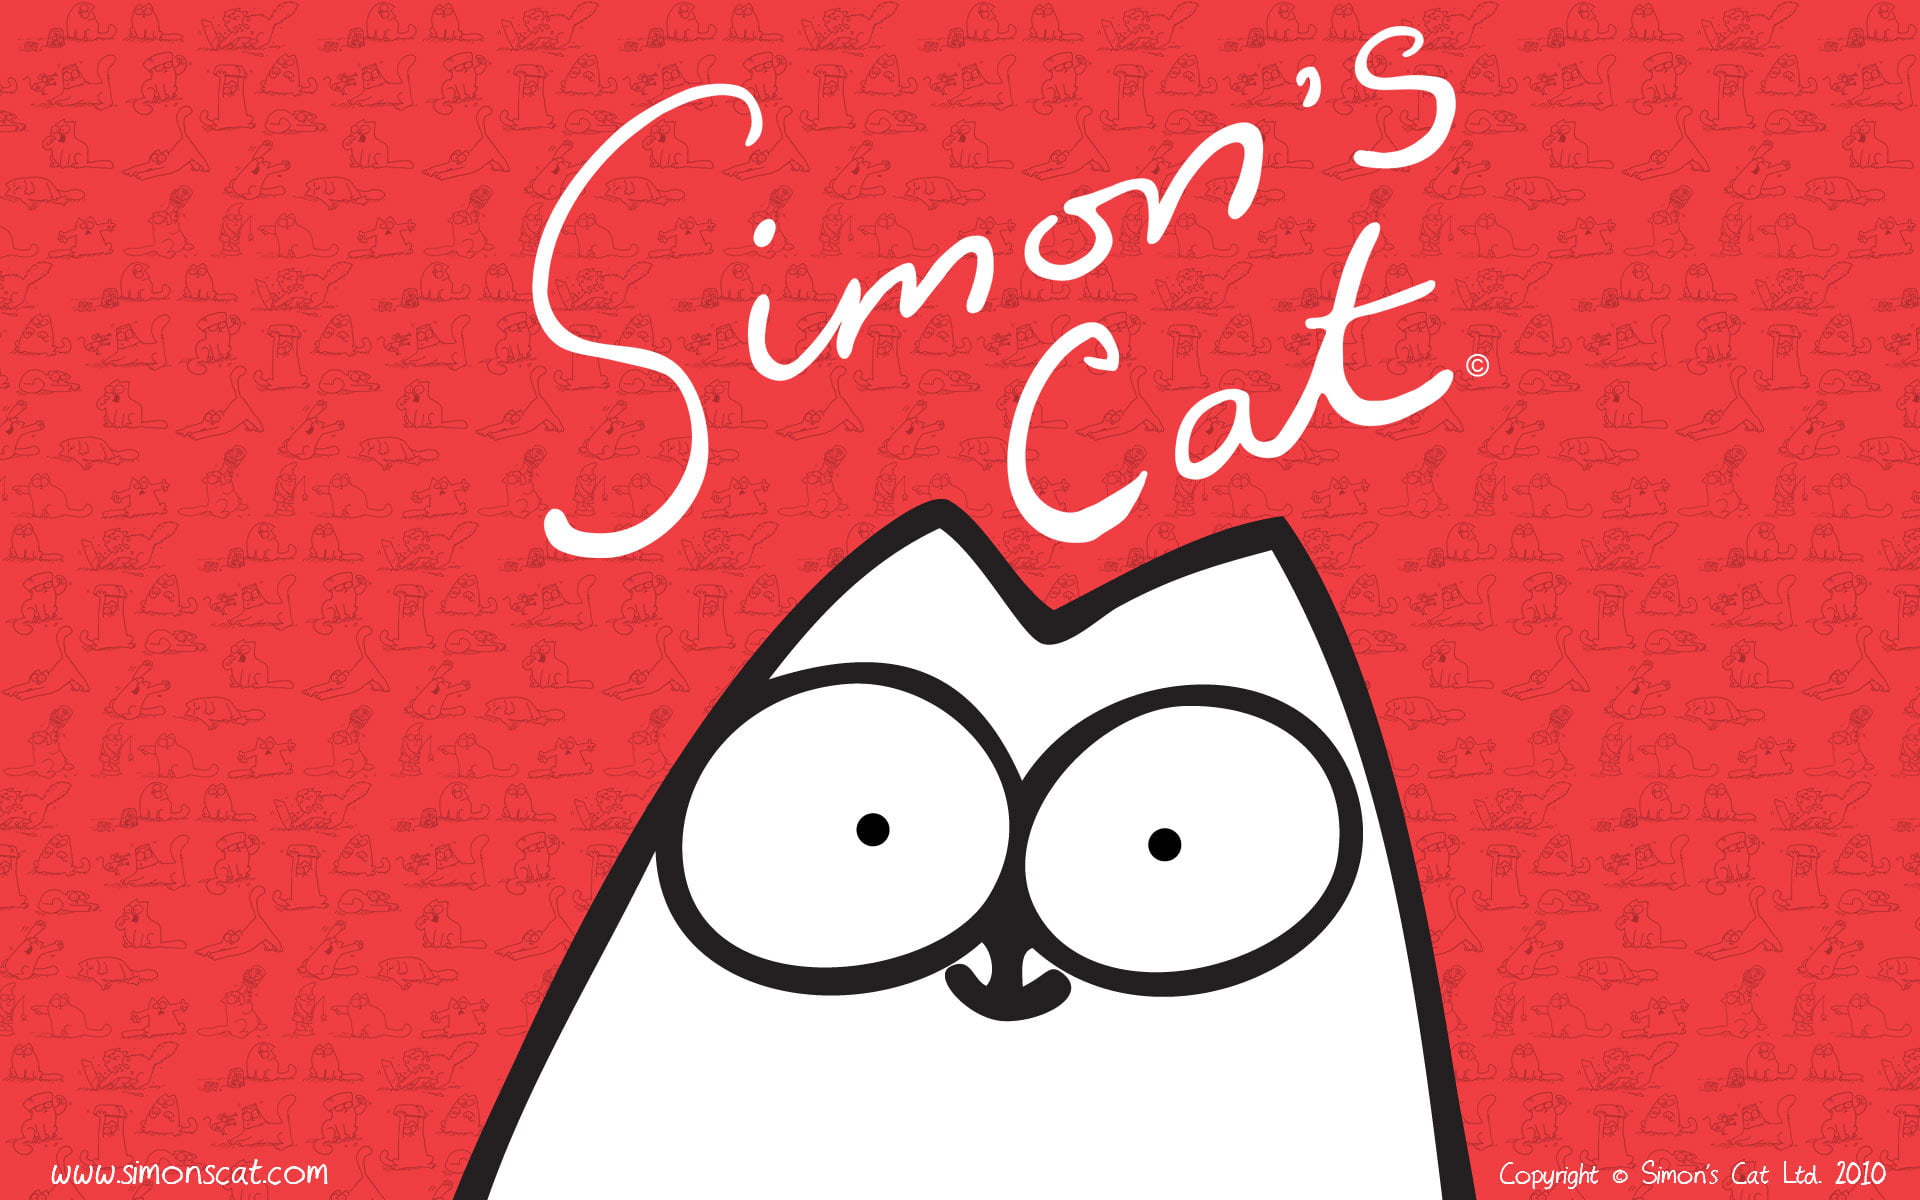 Simon's Cat illustration, vector, celebration, holiday, design